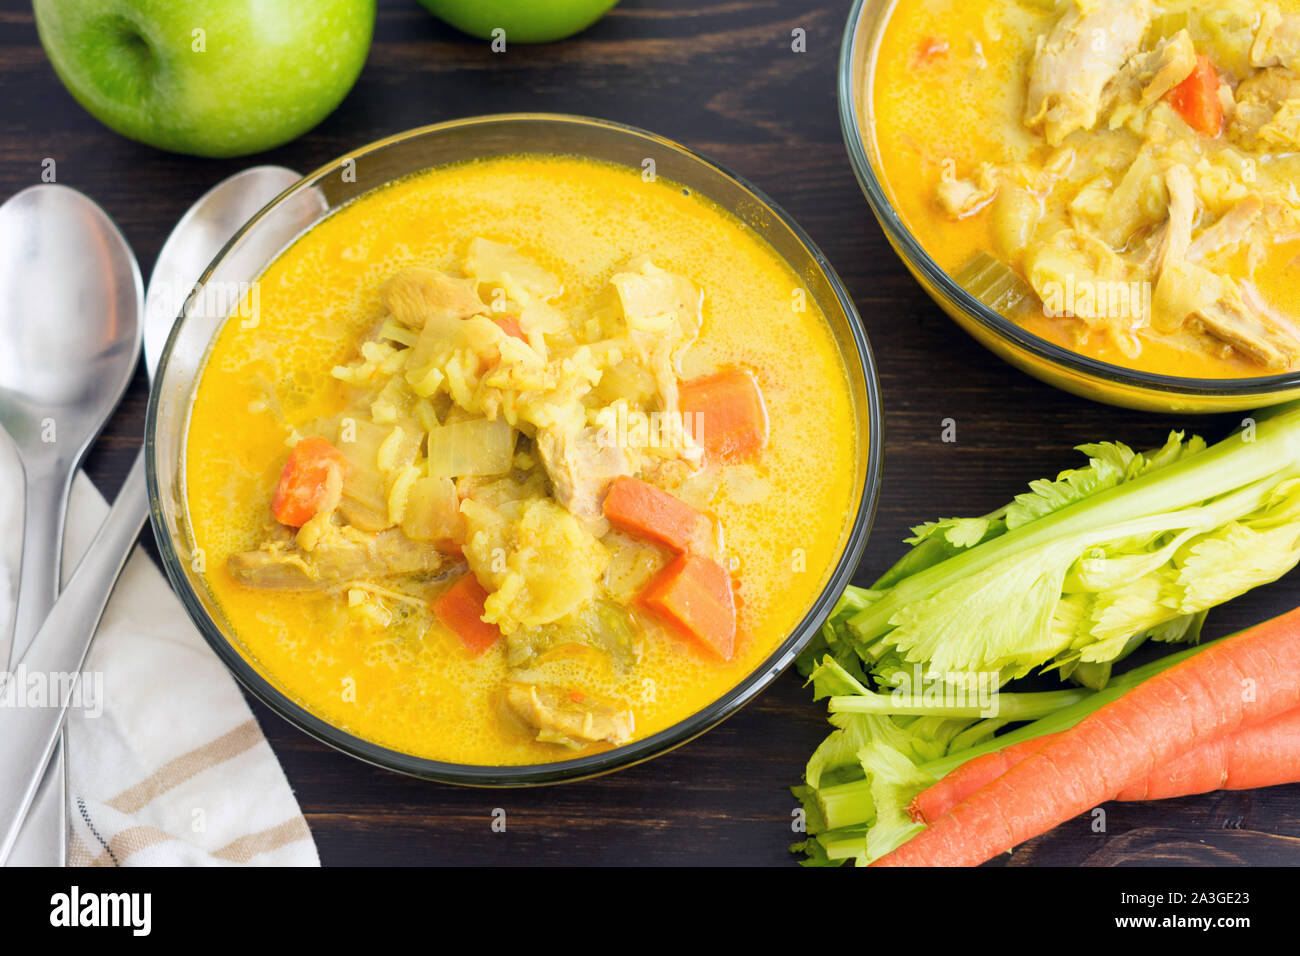 Huhn Mulligatawny Soup: Schalen mit Curry Huhn mulligatawny Suppe mit Äpfel, Sellerie und Karotten Stockfoto